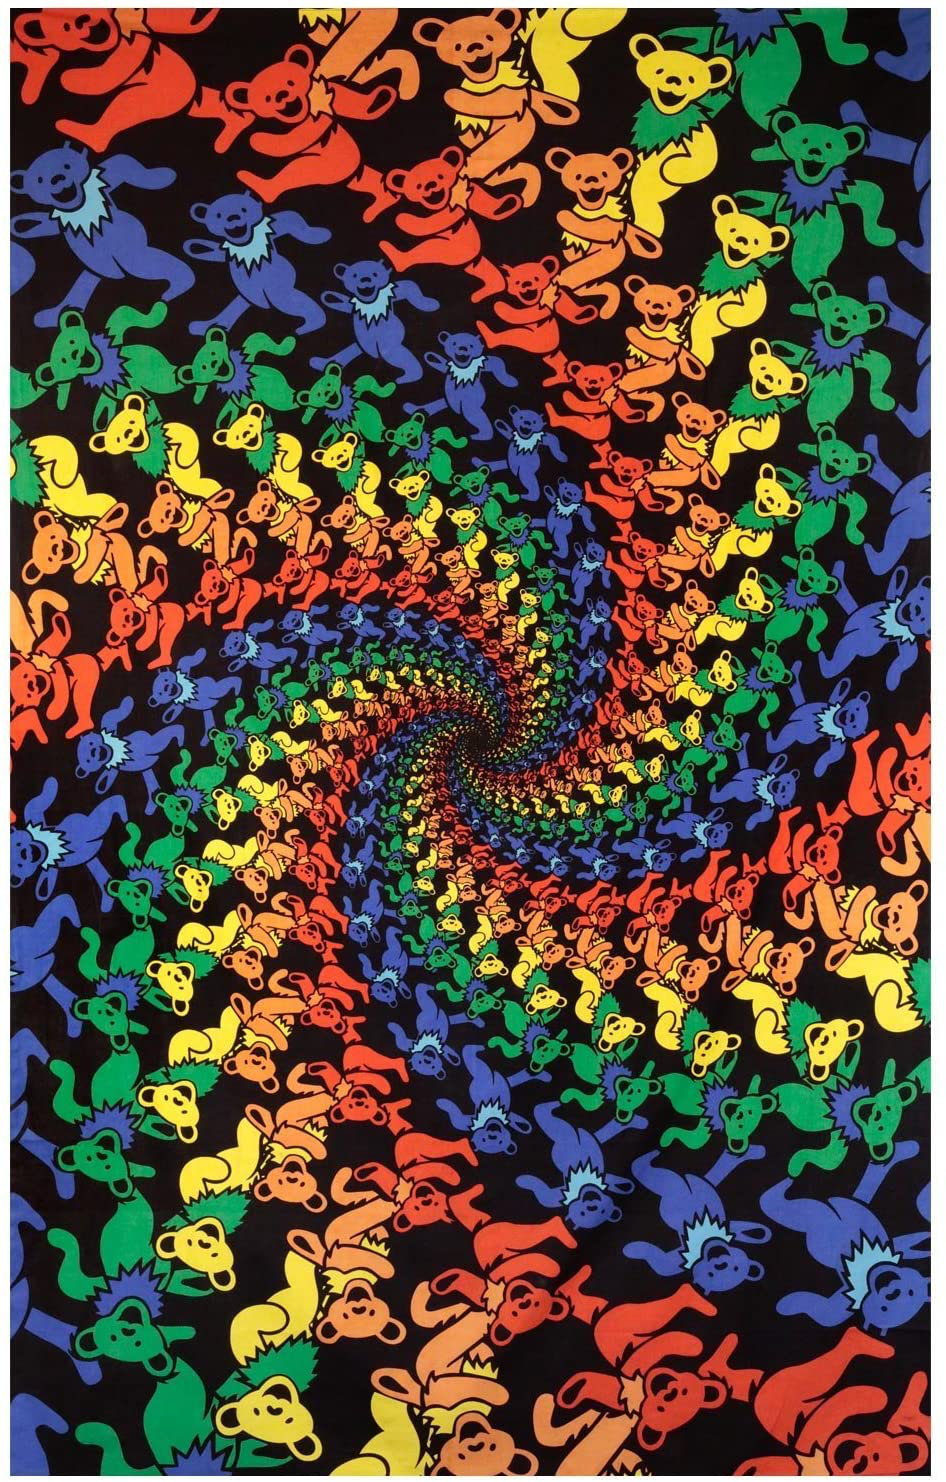 Sunshine Joy Grateful Dead 3D Dancing Bears Spiral Tapestry Tablecloth Wall Art Beach Sheet Huge 60x90 Inches - Amazing 3D Effects